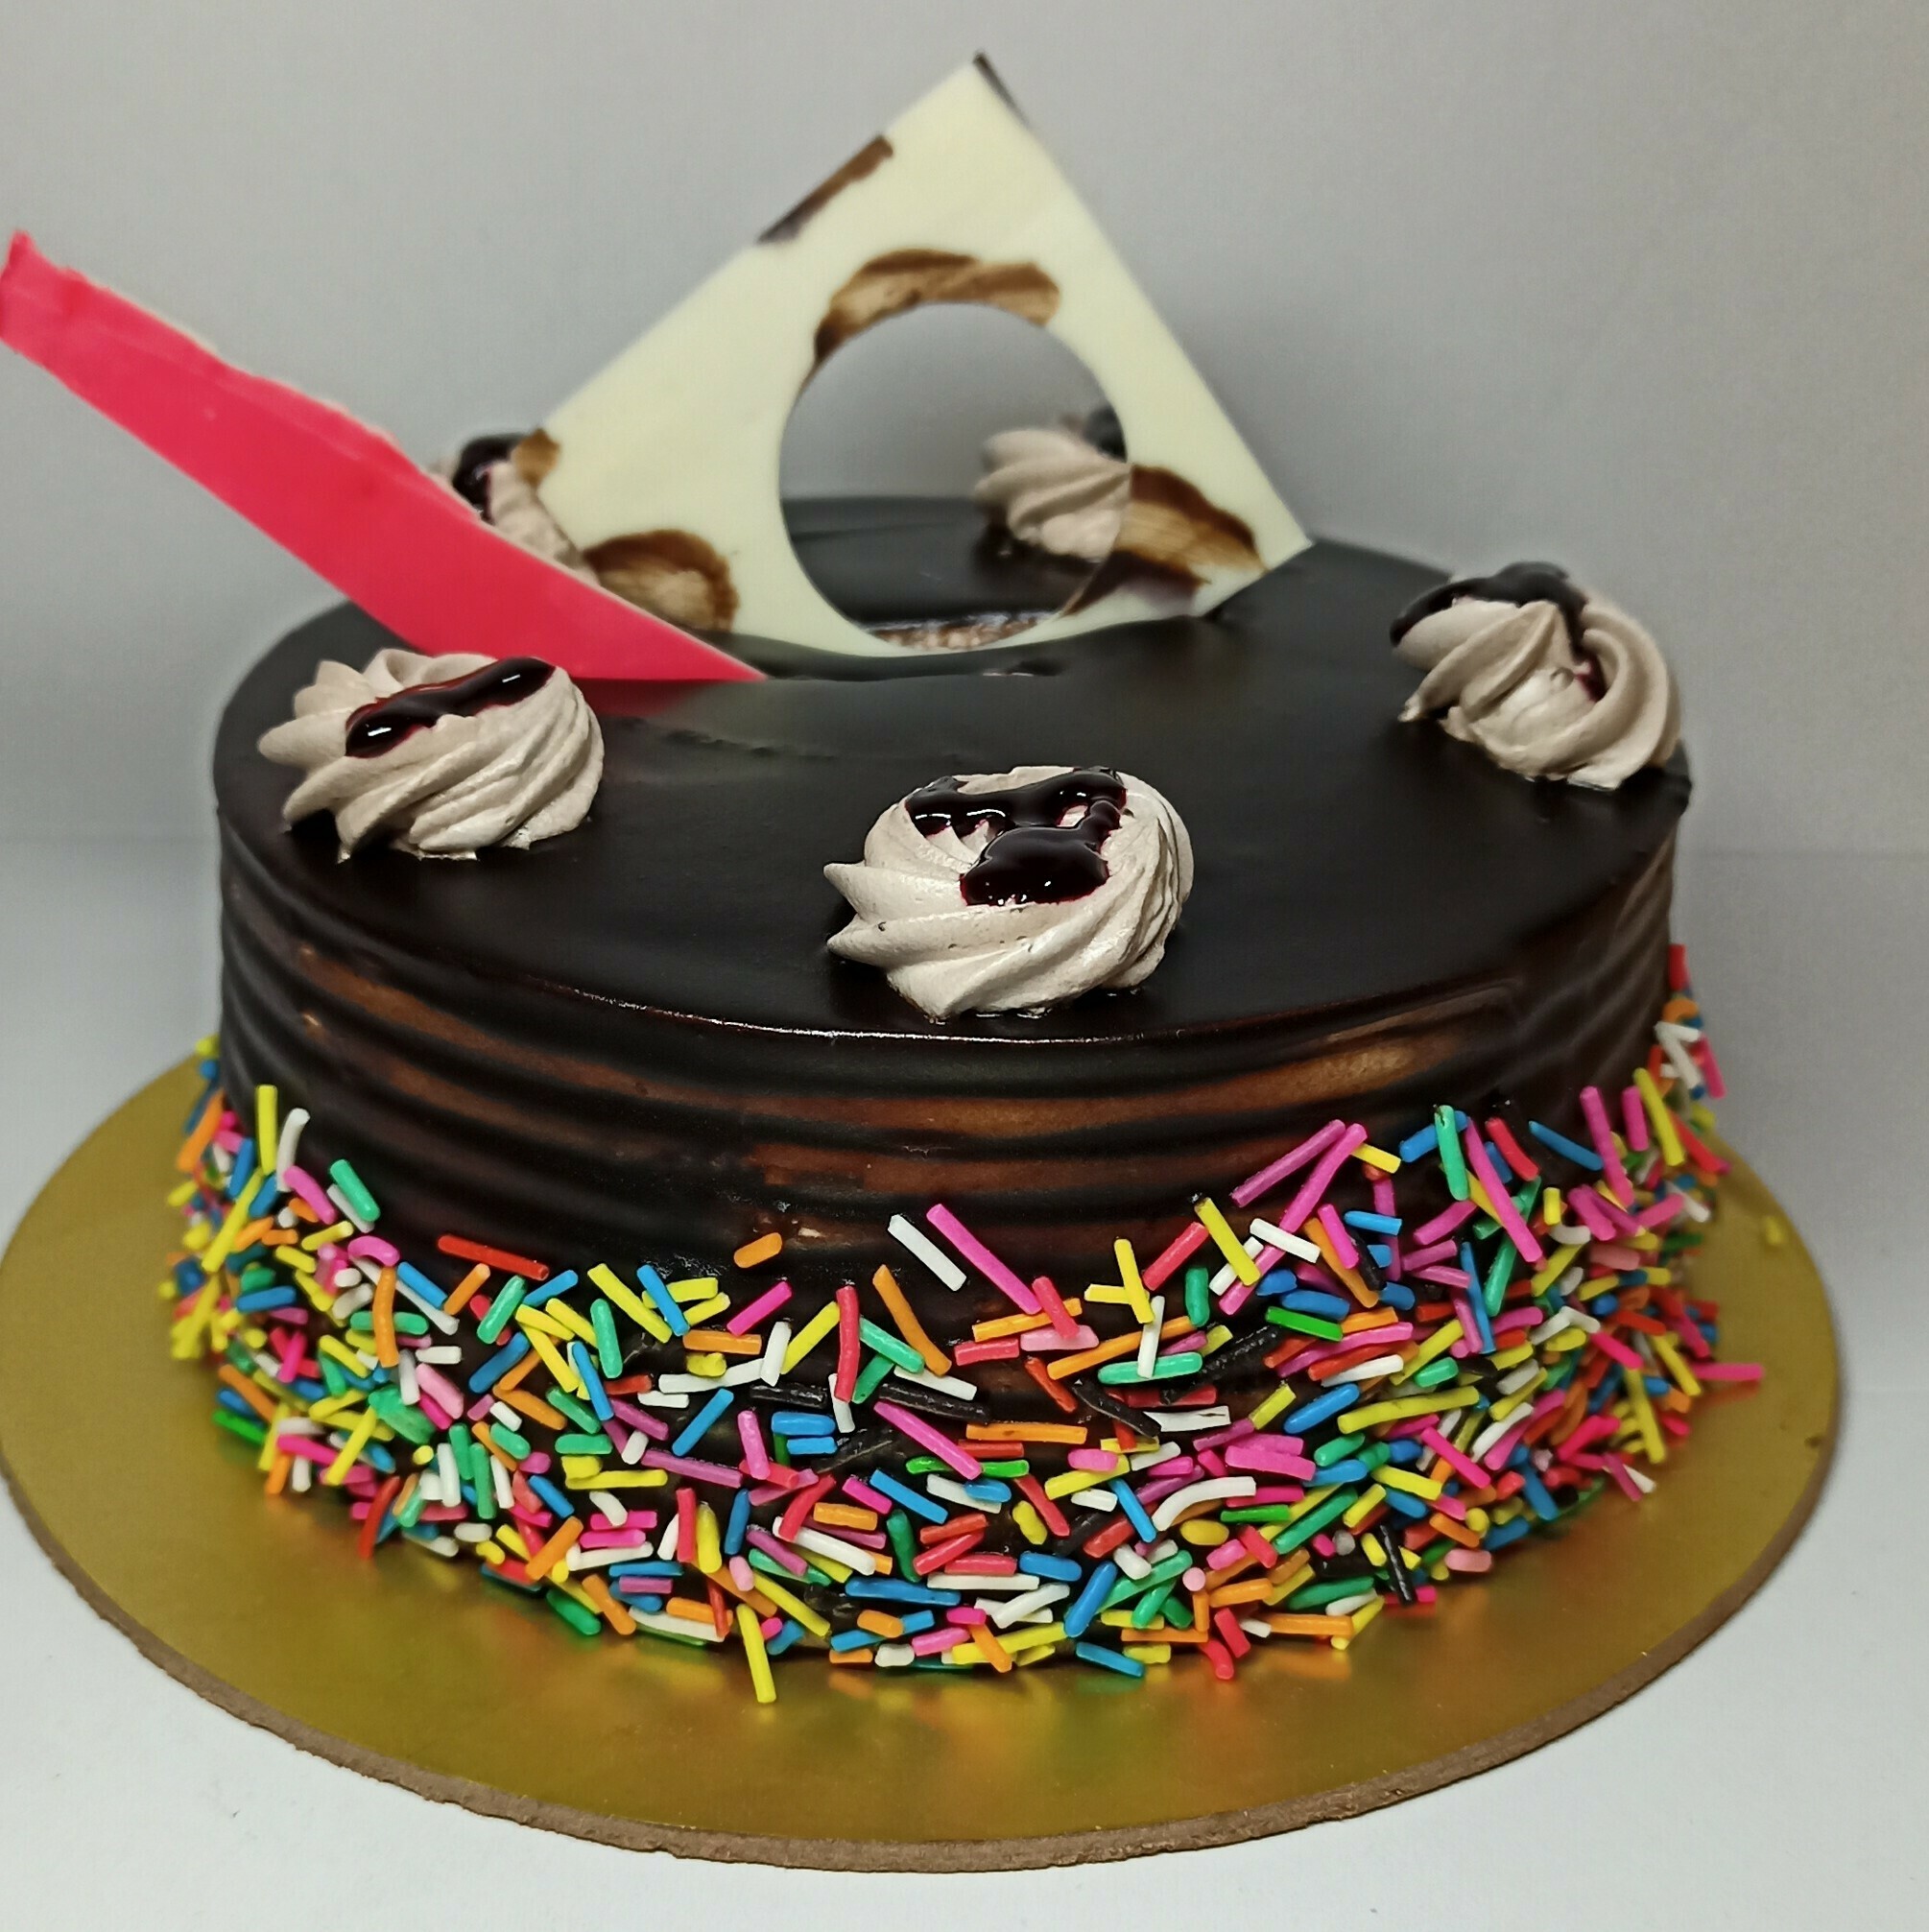 Birthday Cake with chocochips - Zivmart